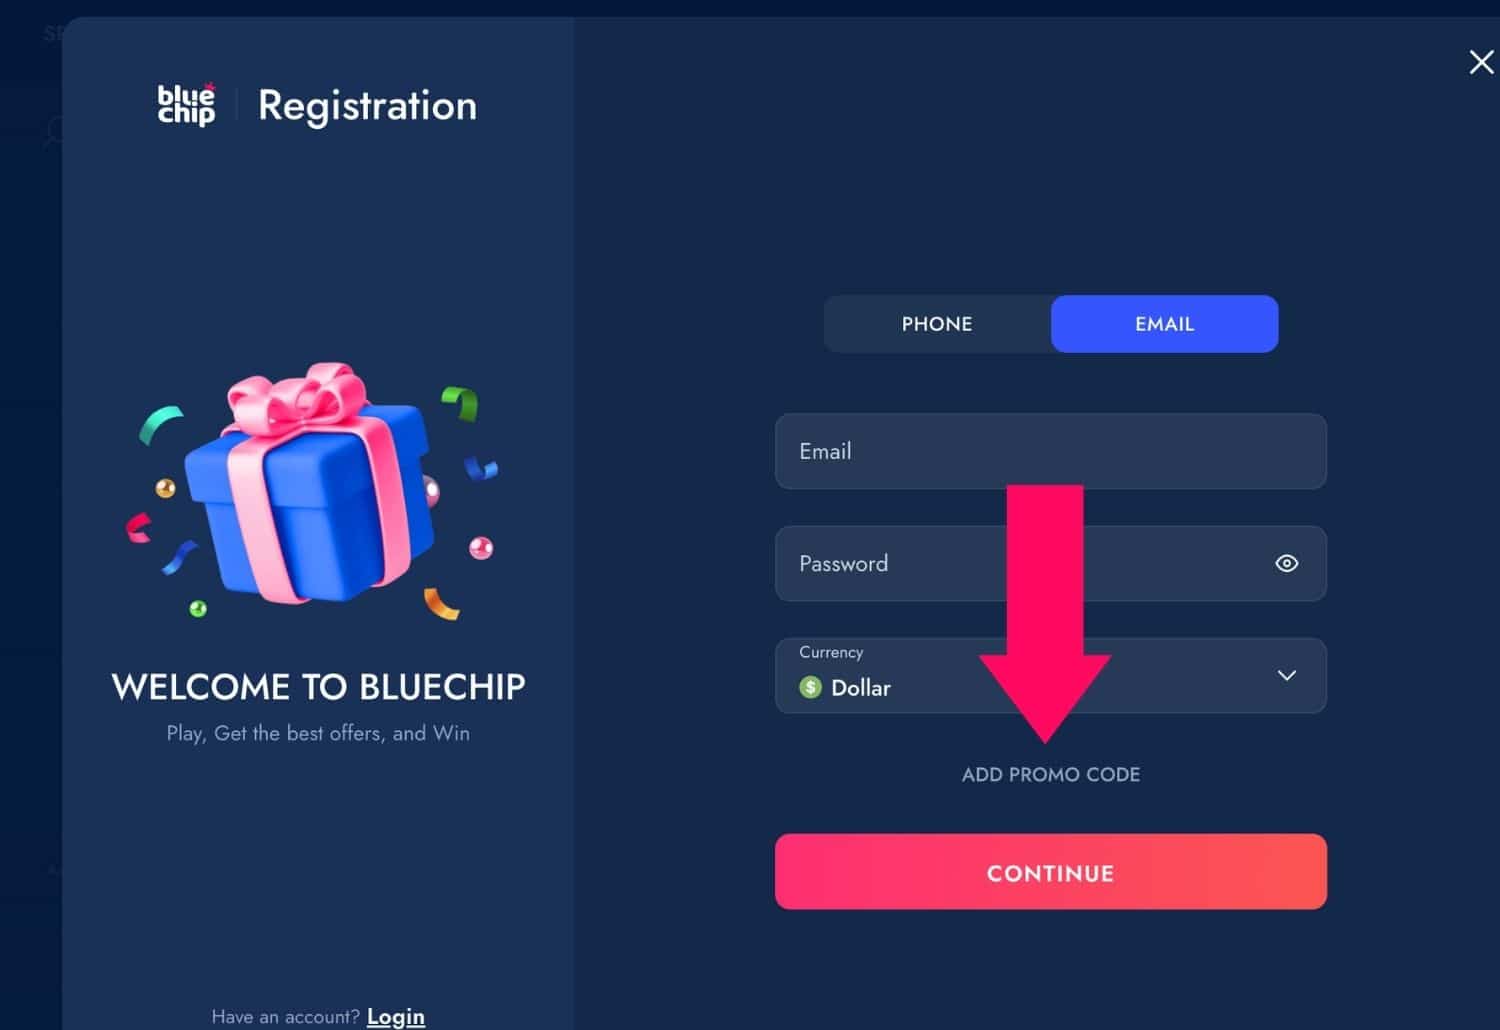 Bluechip Casino India add promo code detailed guide